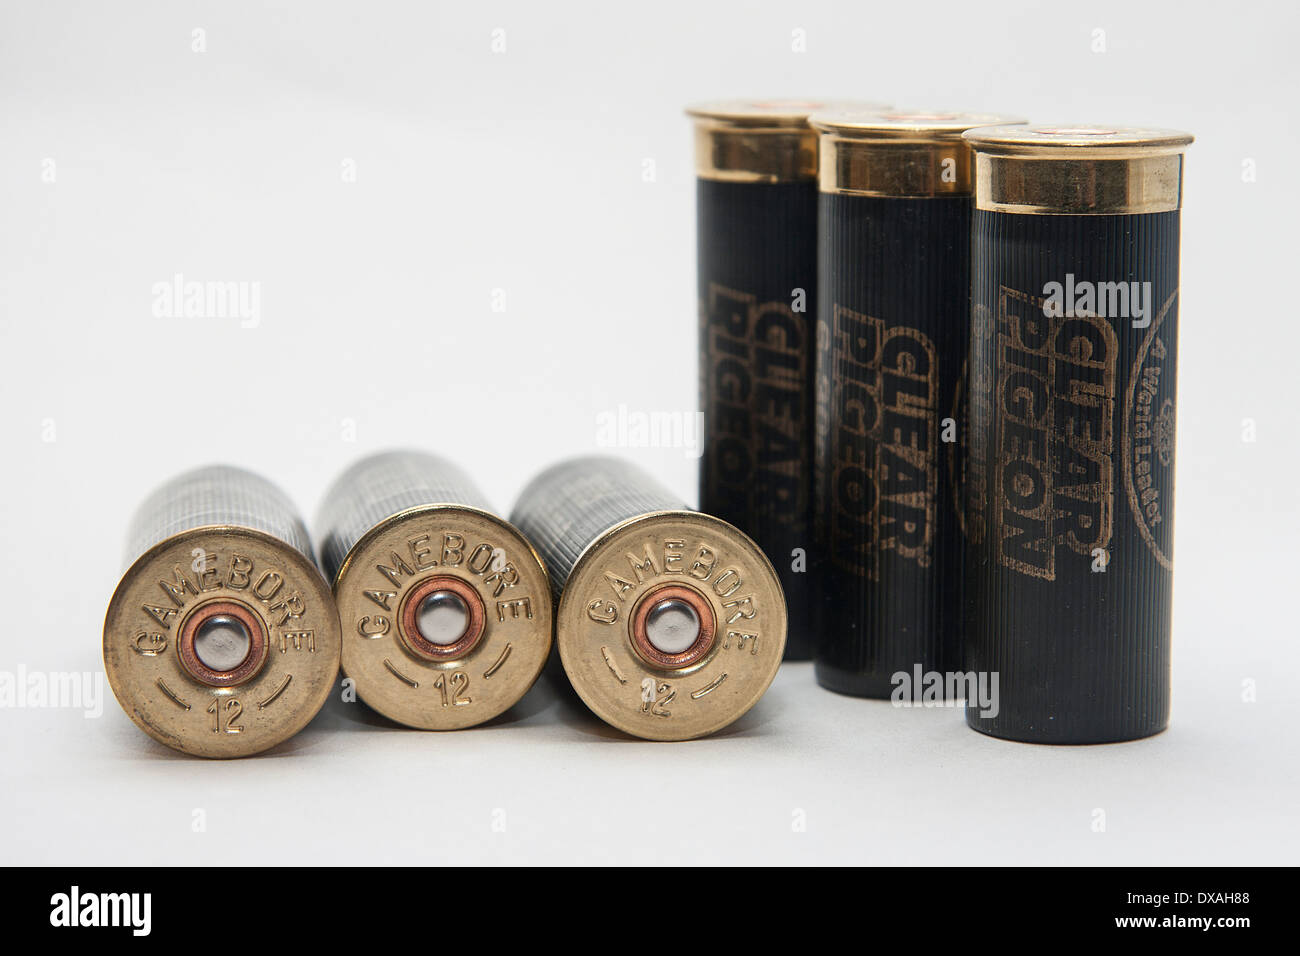 Vintage .410 brass 'Almac; shotgun cartridges Stock Photo - Alamy